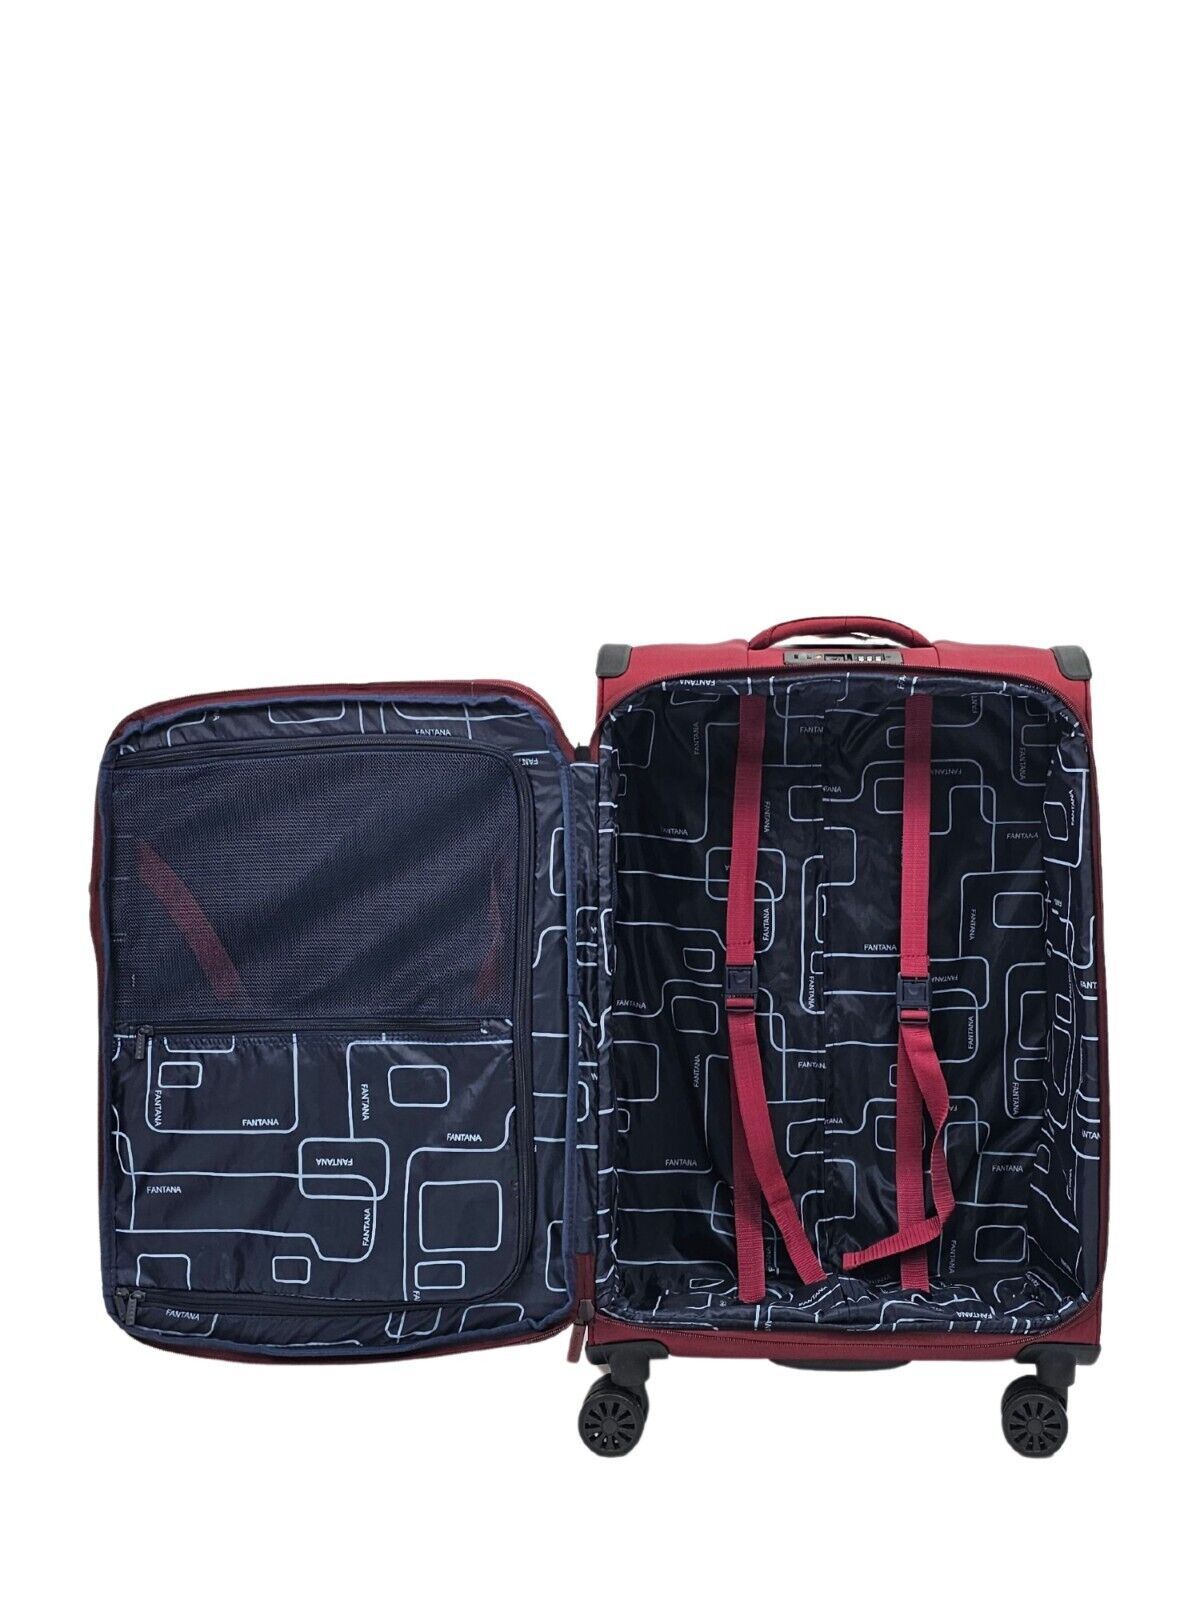 Lightweight Burgundy Suitcases 4 Wheel Luggage Travel Cabin Bag